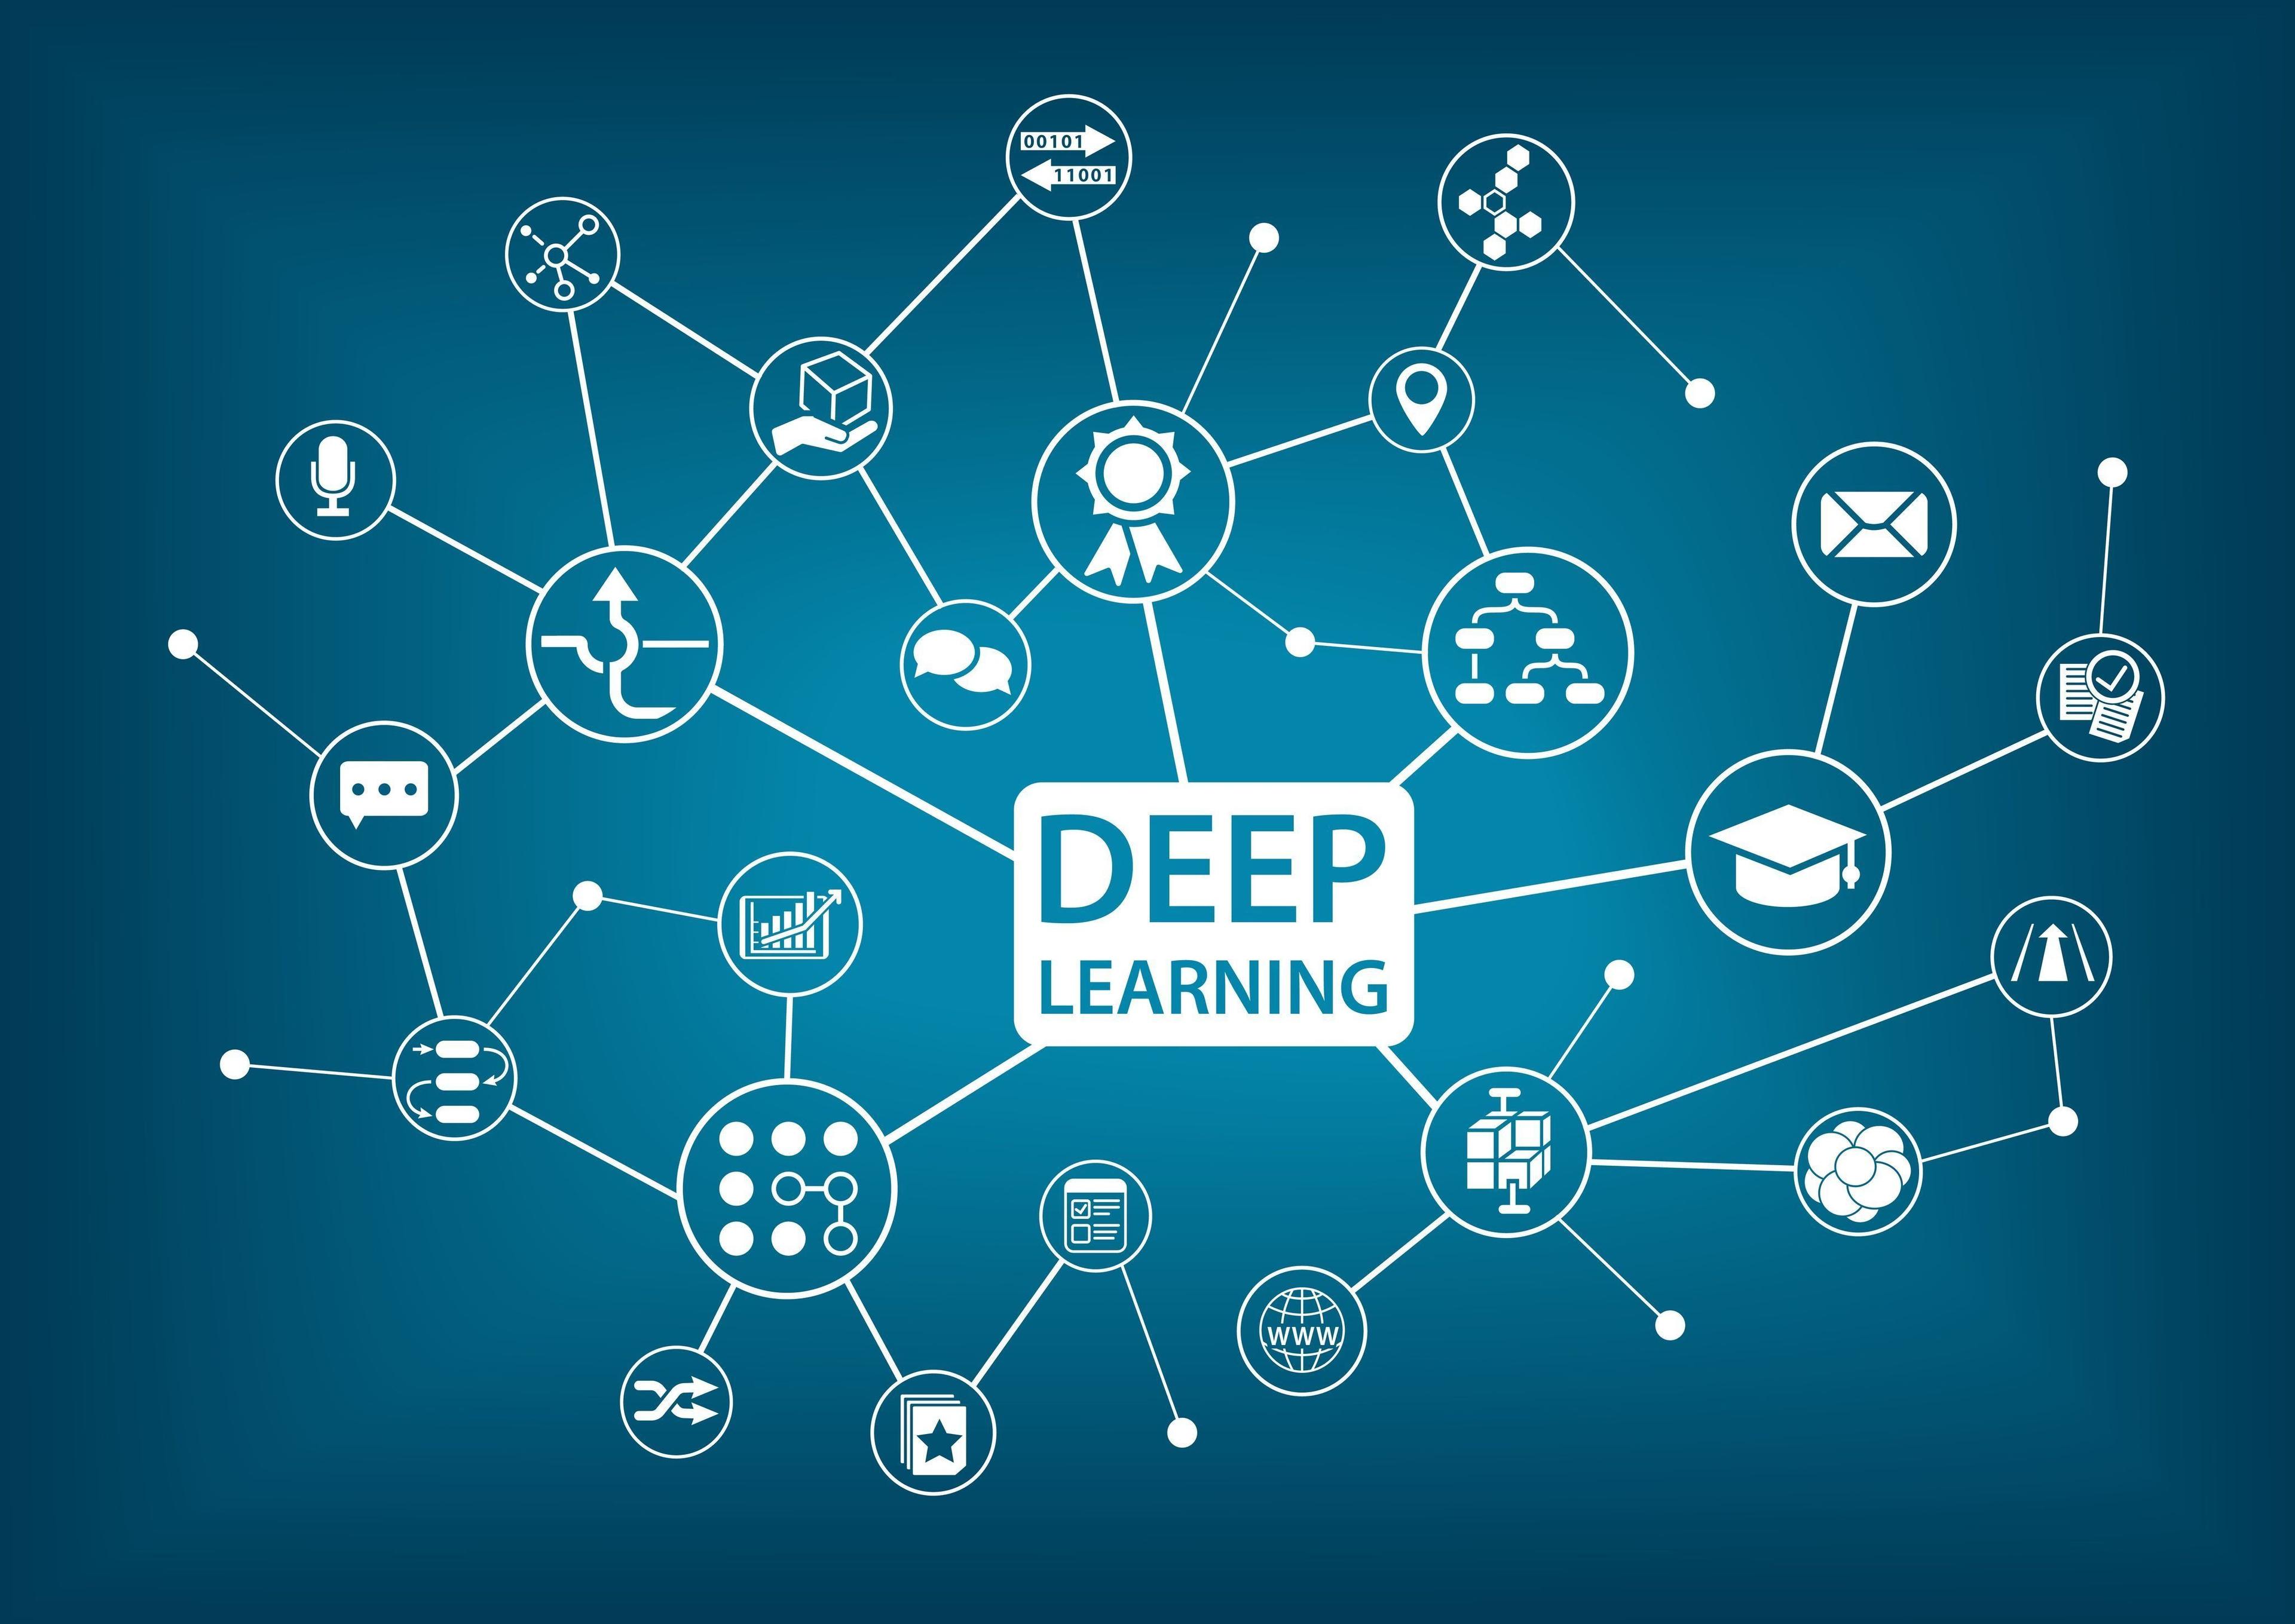 Making Deep Learning Models Generalize Better